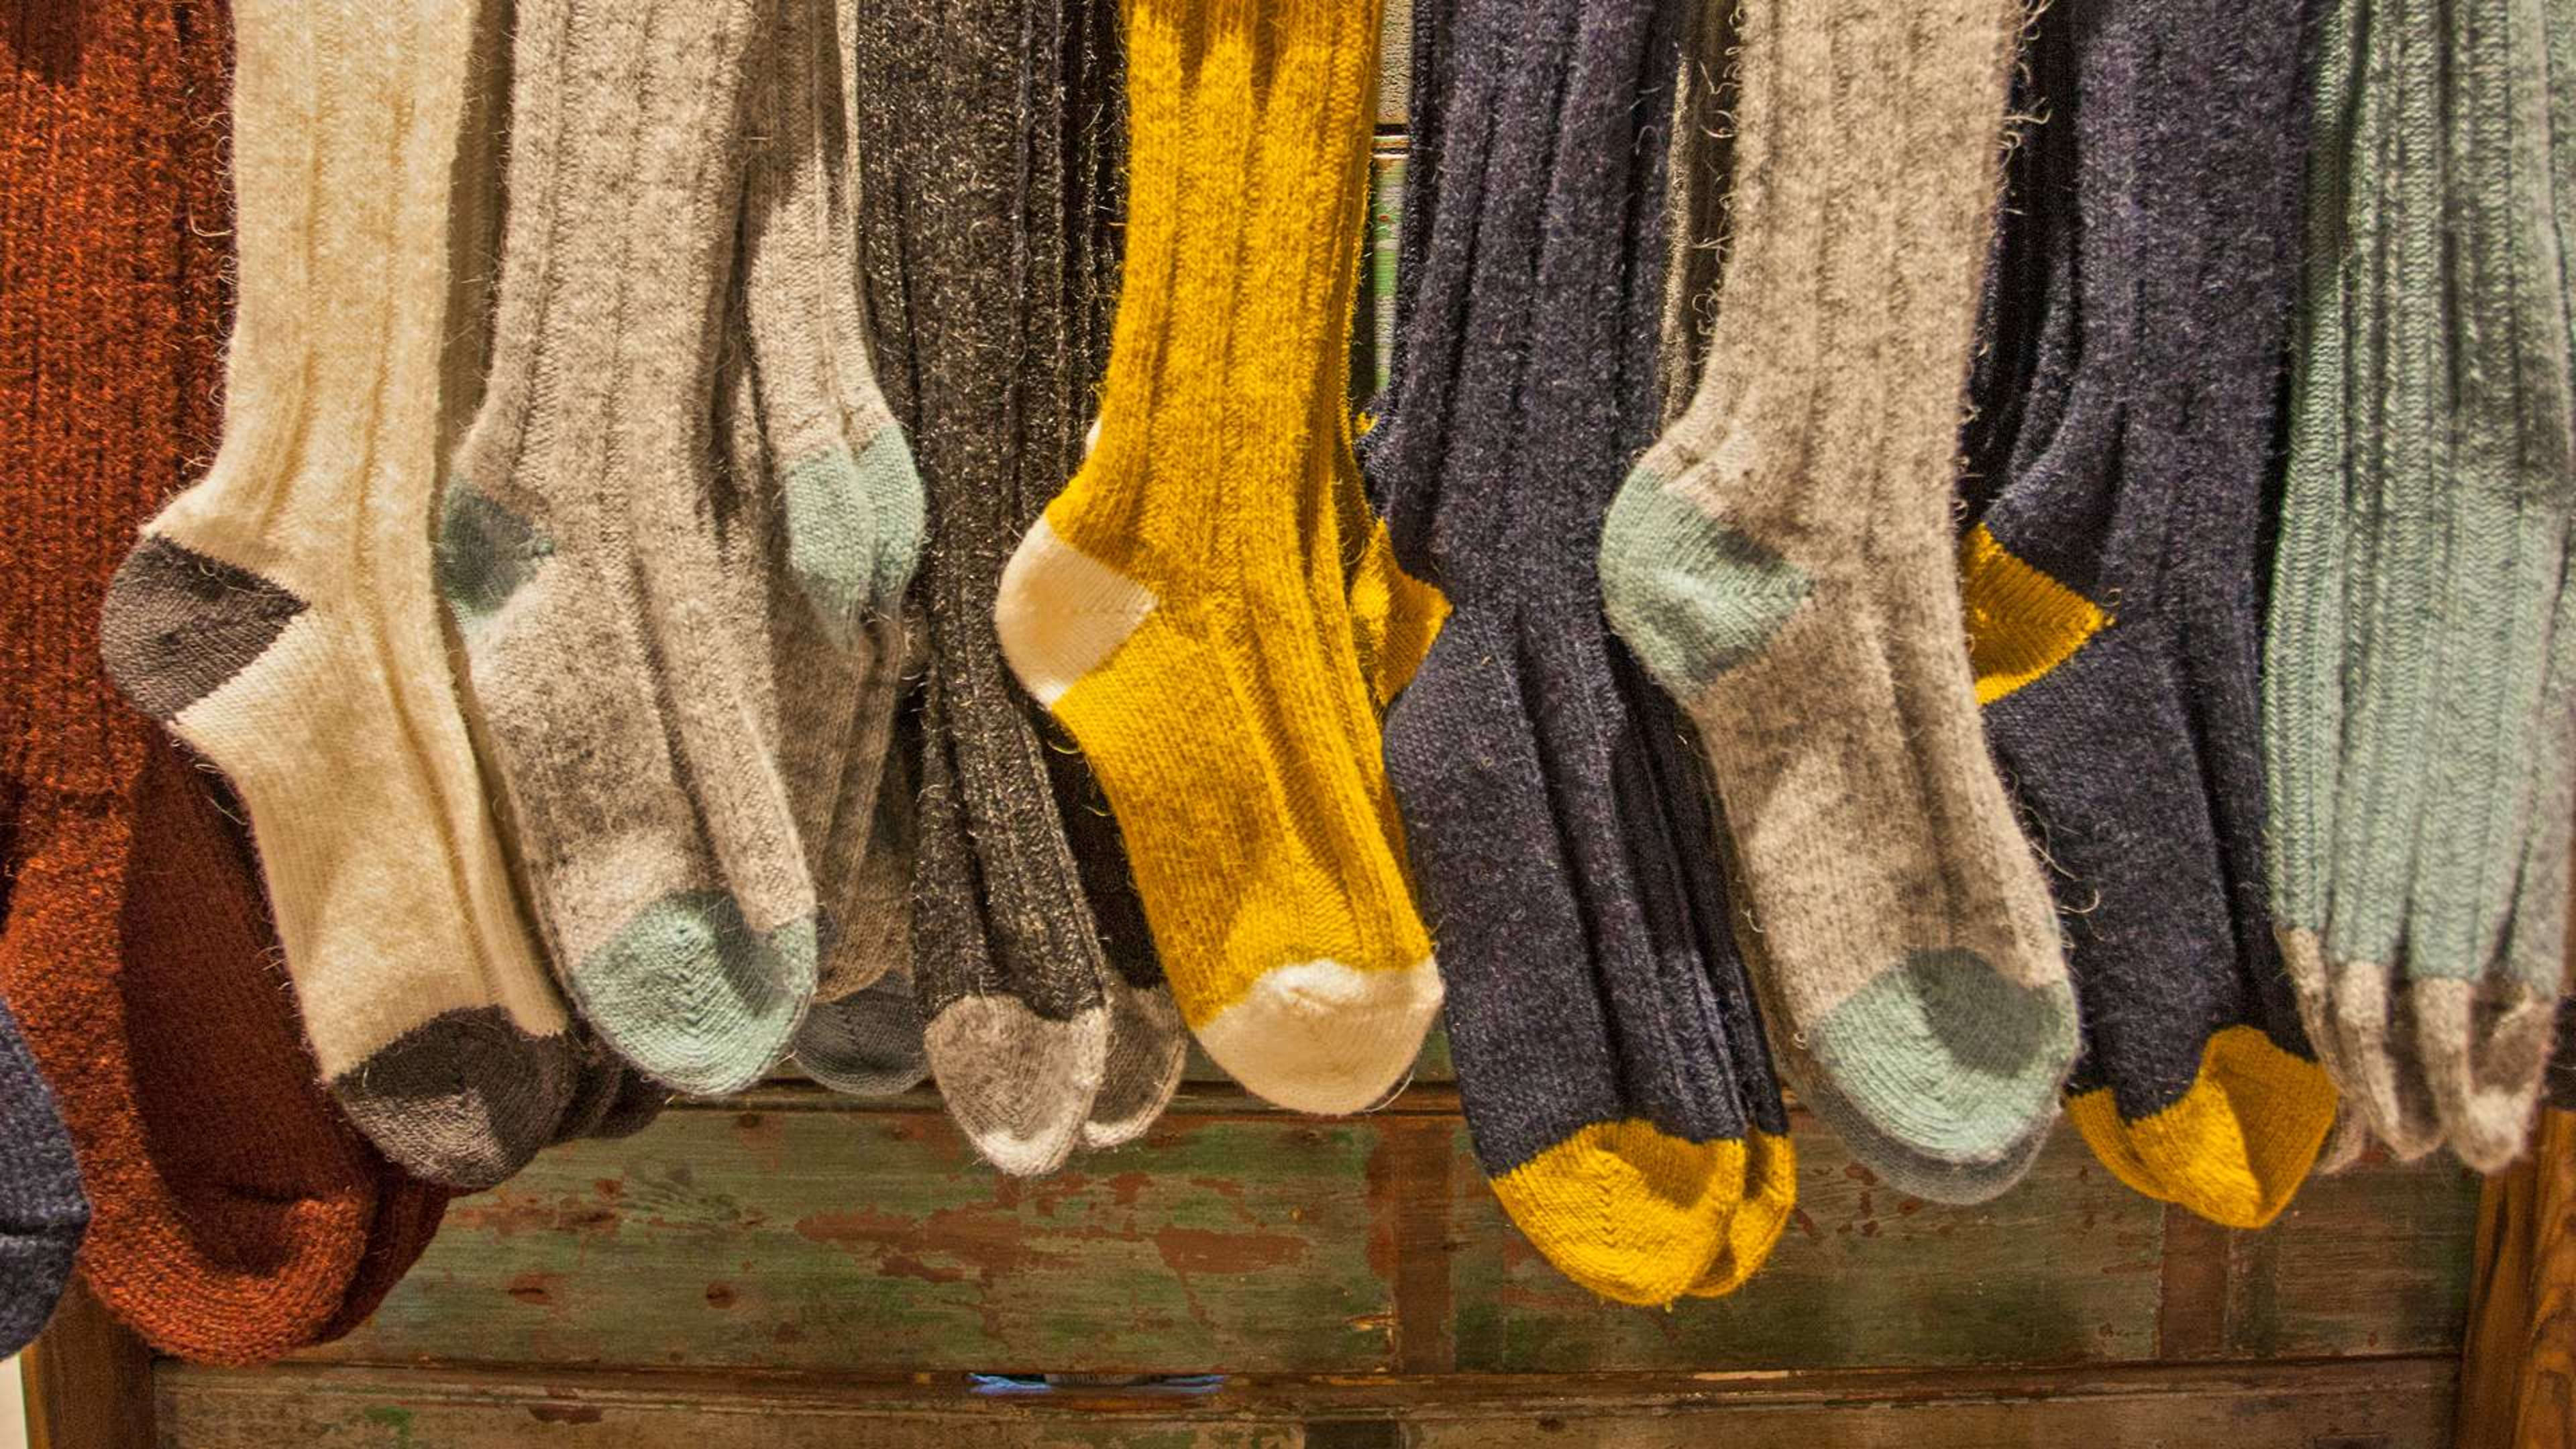 Woollen socks hanging in an Icelandic souvenir shop